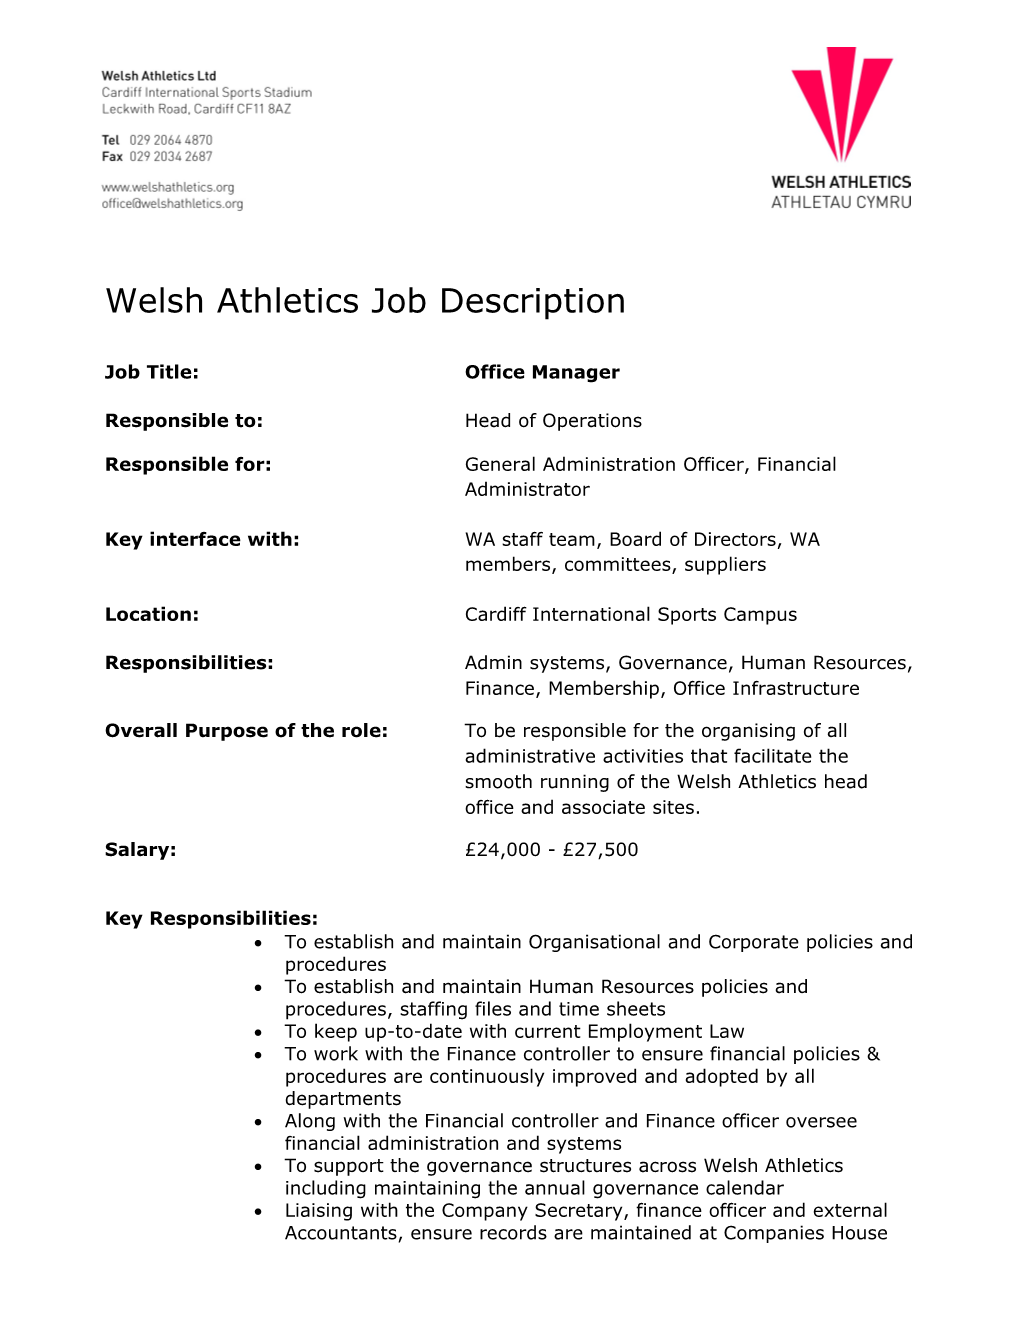 Welsh Athletics Job Description